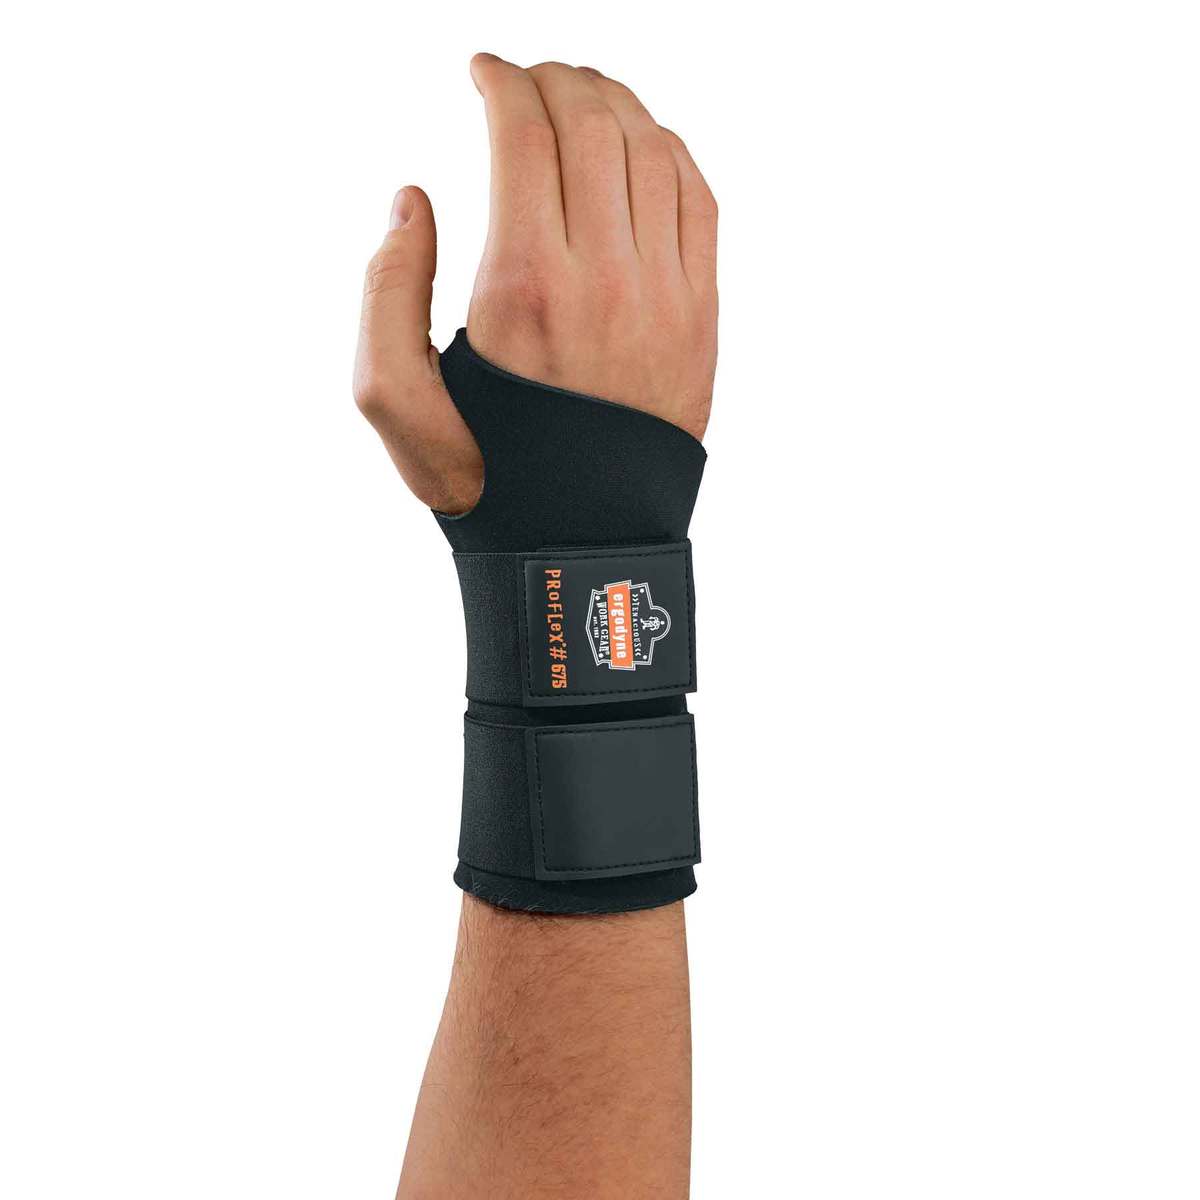 Ergodyne Small Black ProFlex® 675 Neoprene Ambidextrous Wrist Support